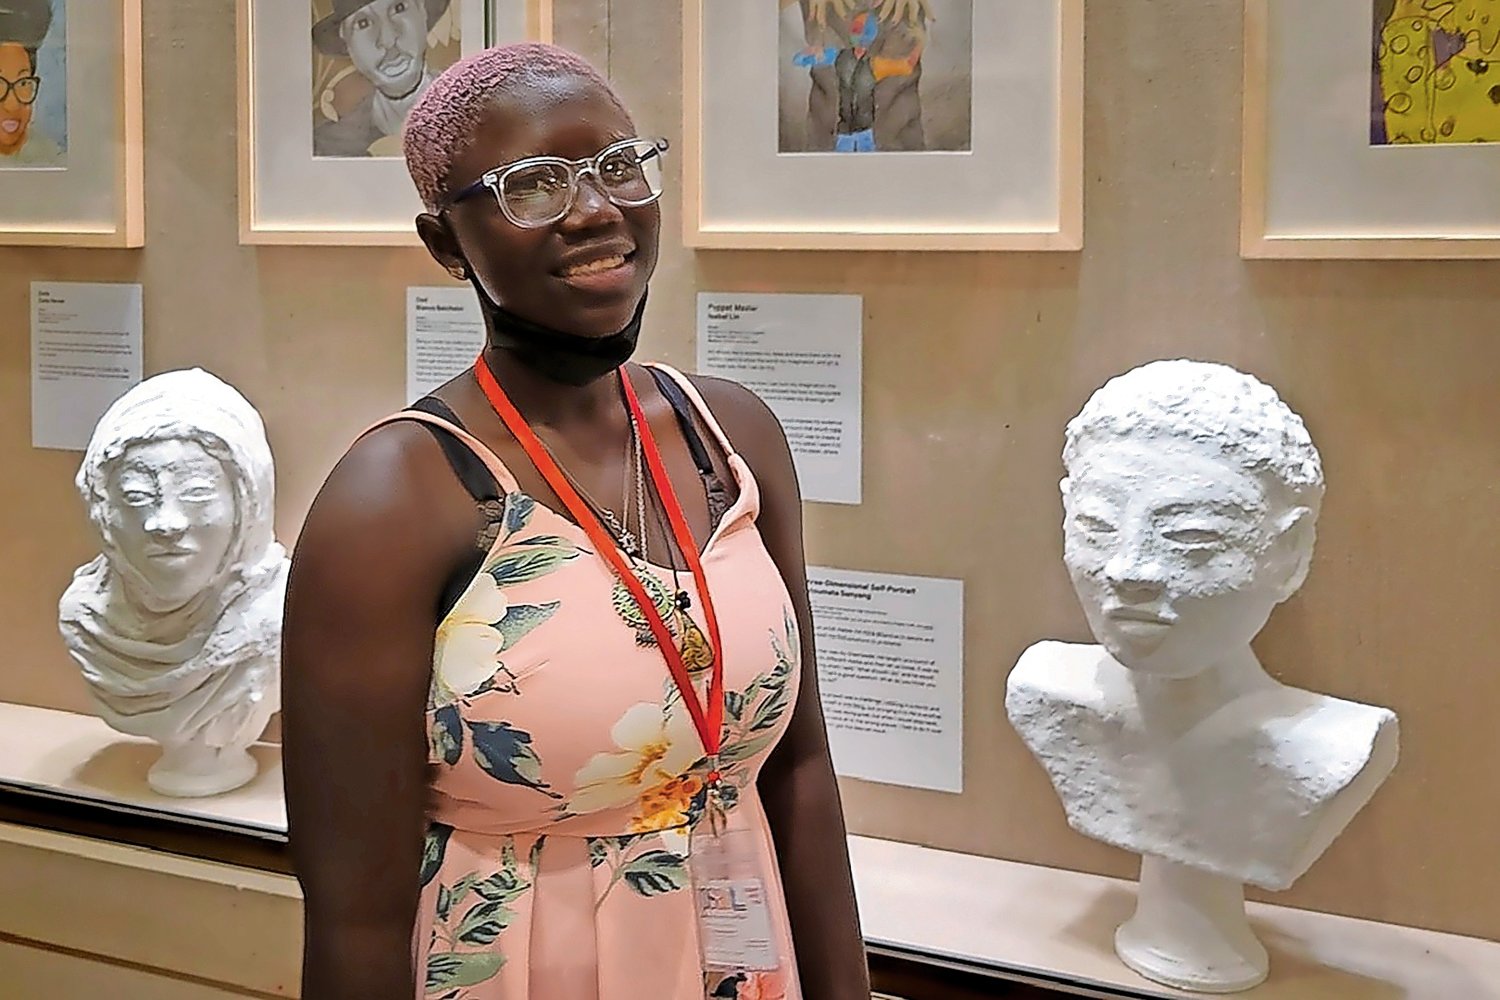 Fatoumata Sanyang at the The Metropolitan Museum of Art with her three-dimensional self portrait.